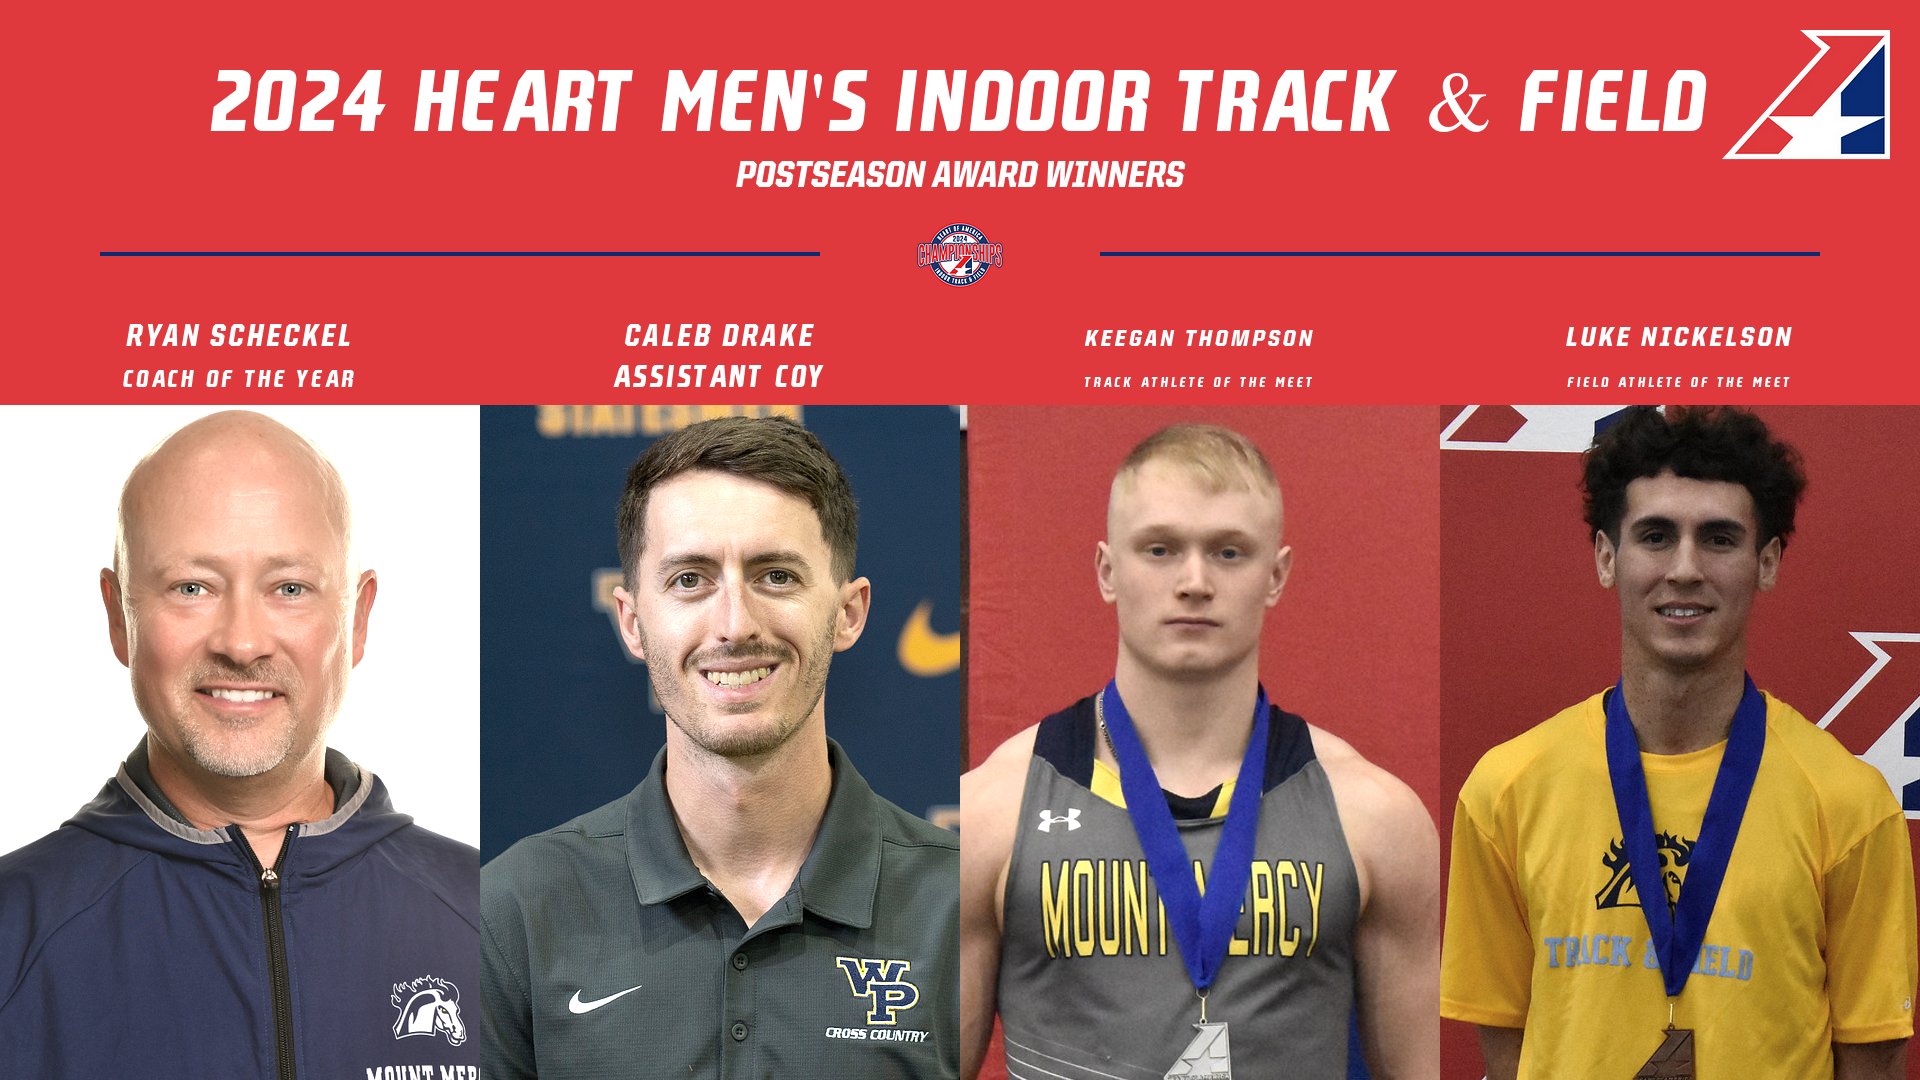 2024 Heart Men's Indoor Track & Field Postseason Awards Announced